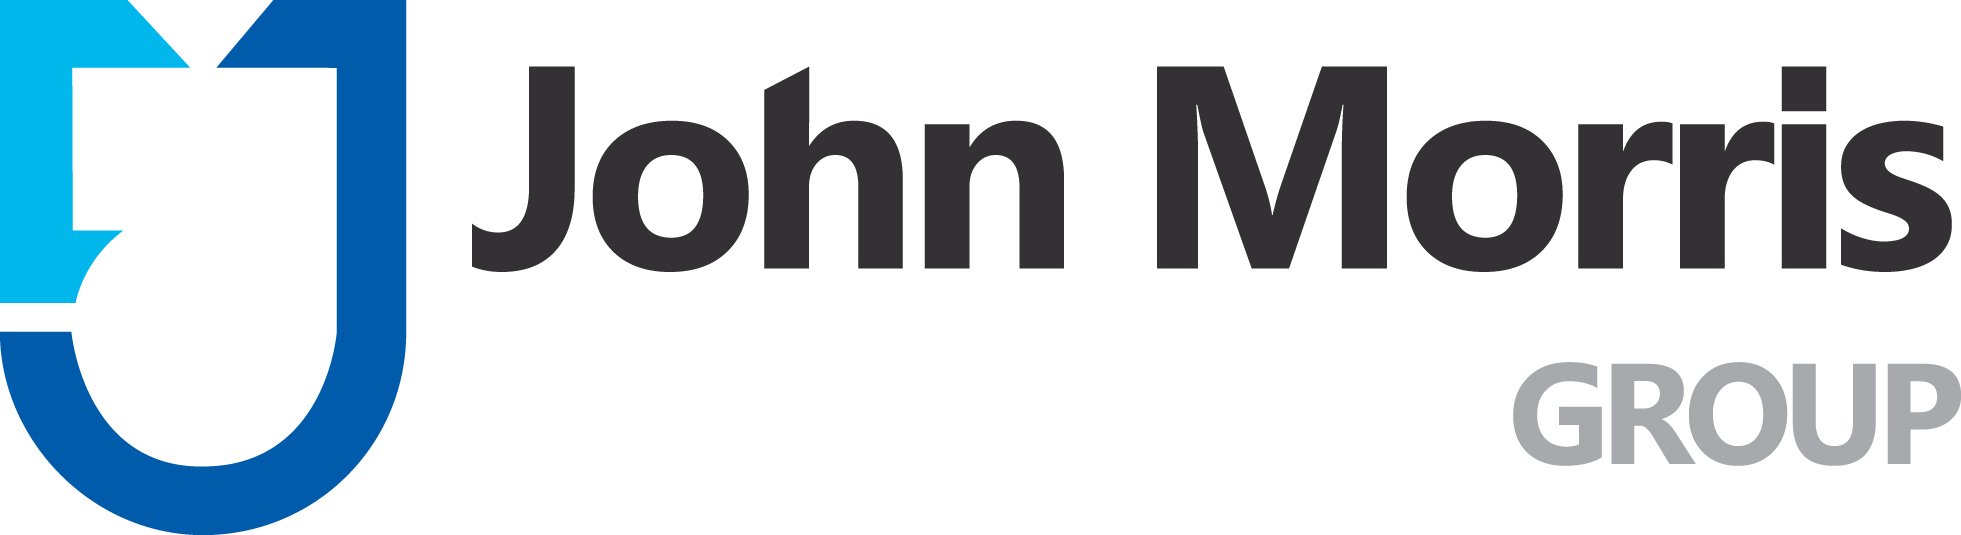 John Morris Scientific Pty Ltd logo